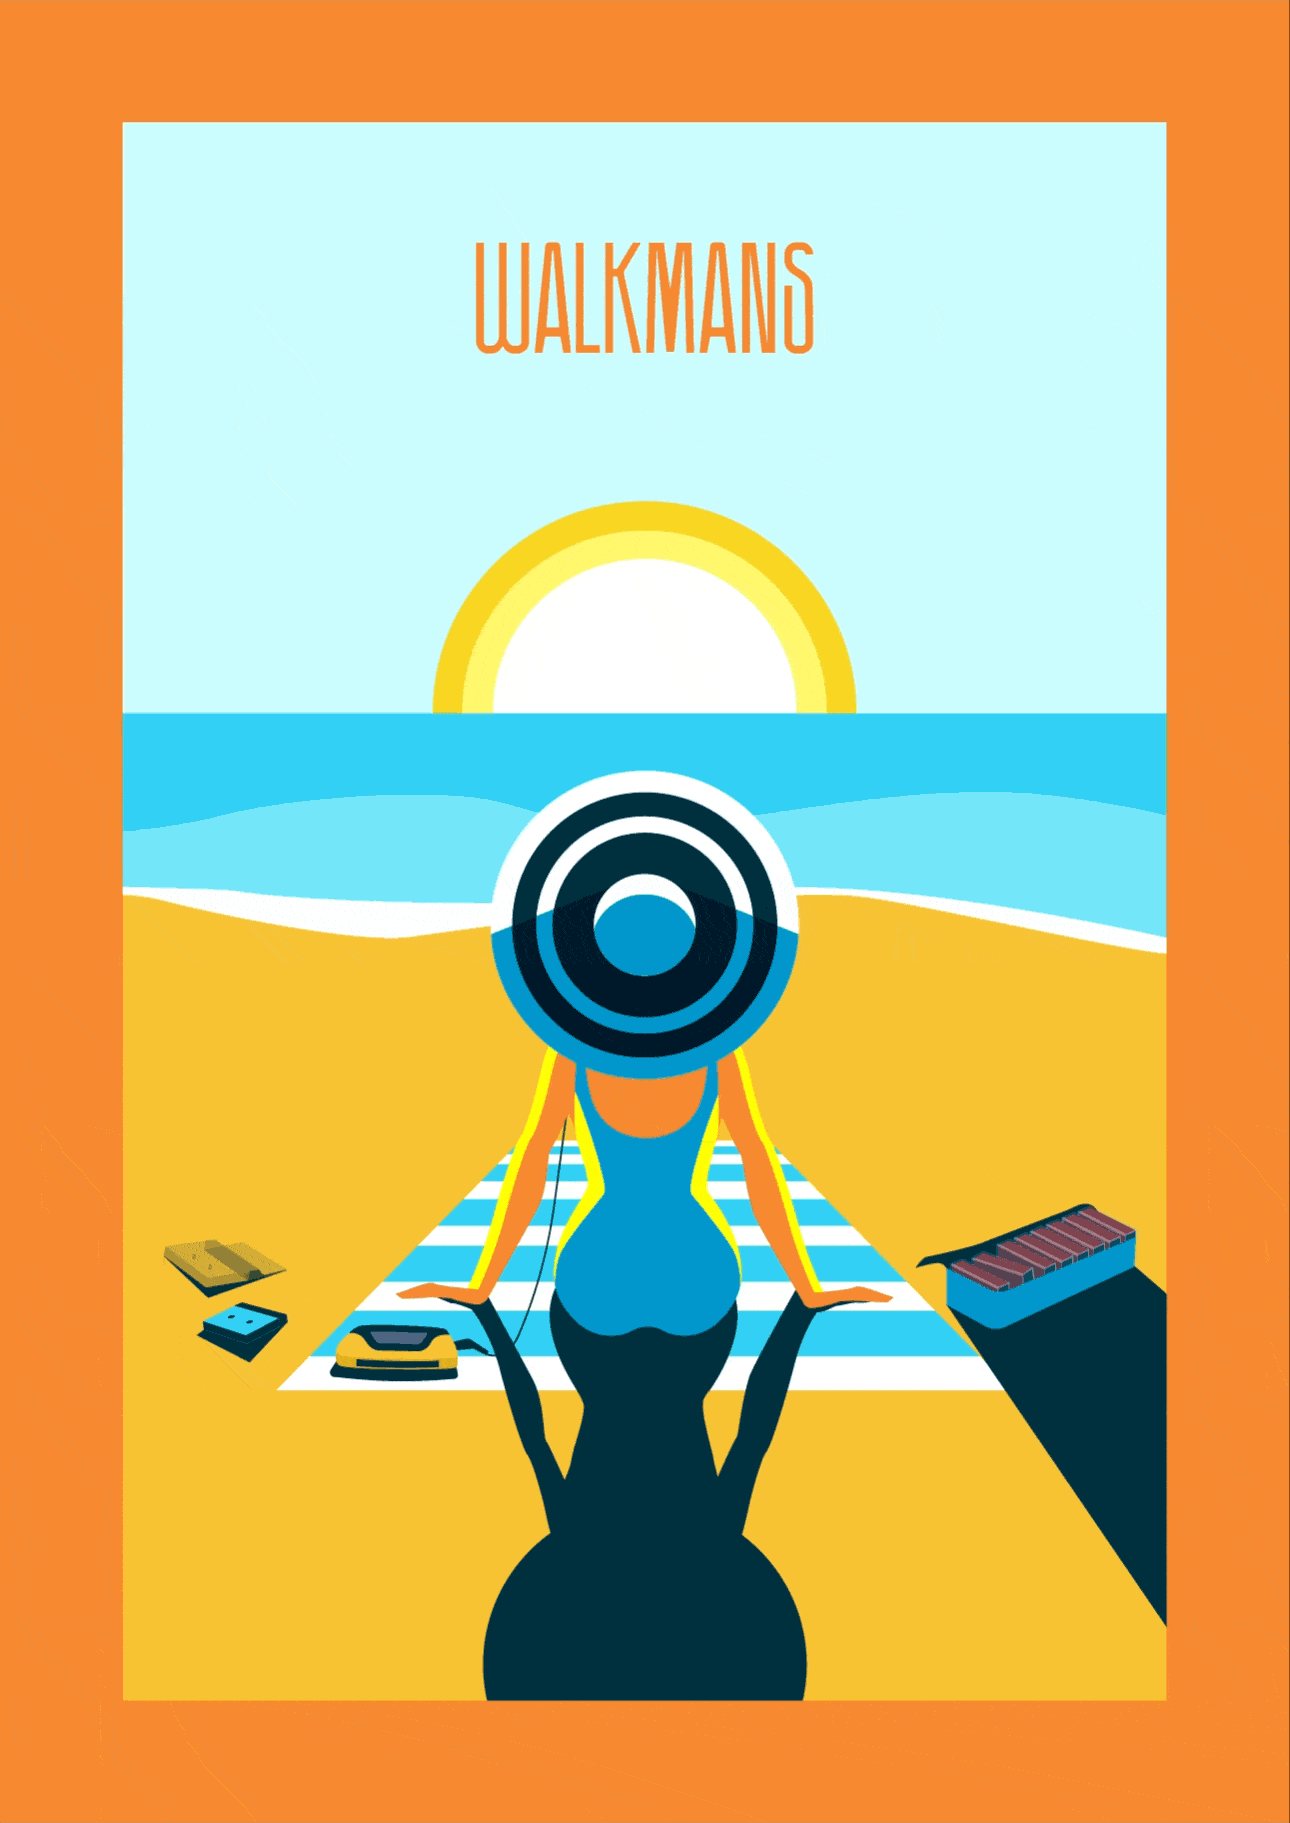 Walkman on a beach